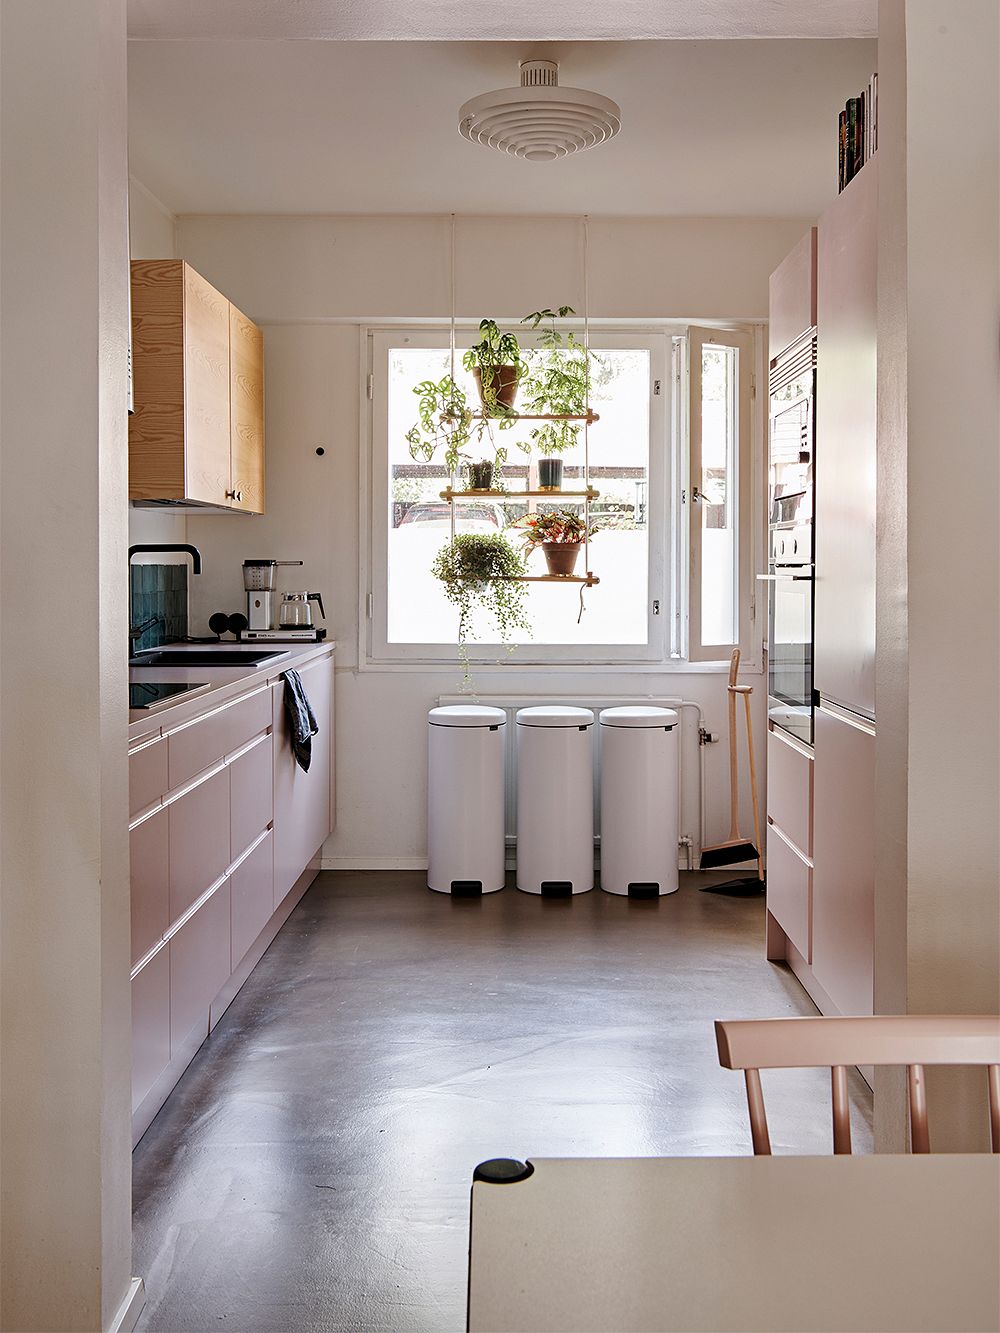 An image of Asli Ufacik's home: the kitchen decor.